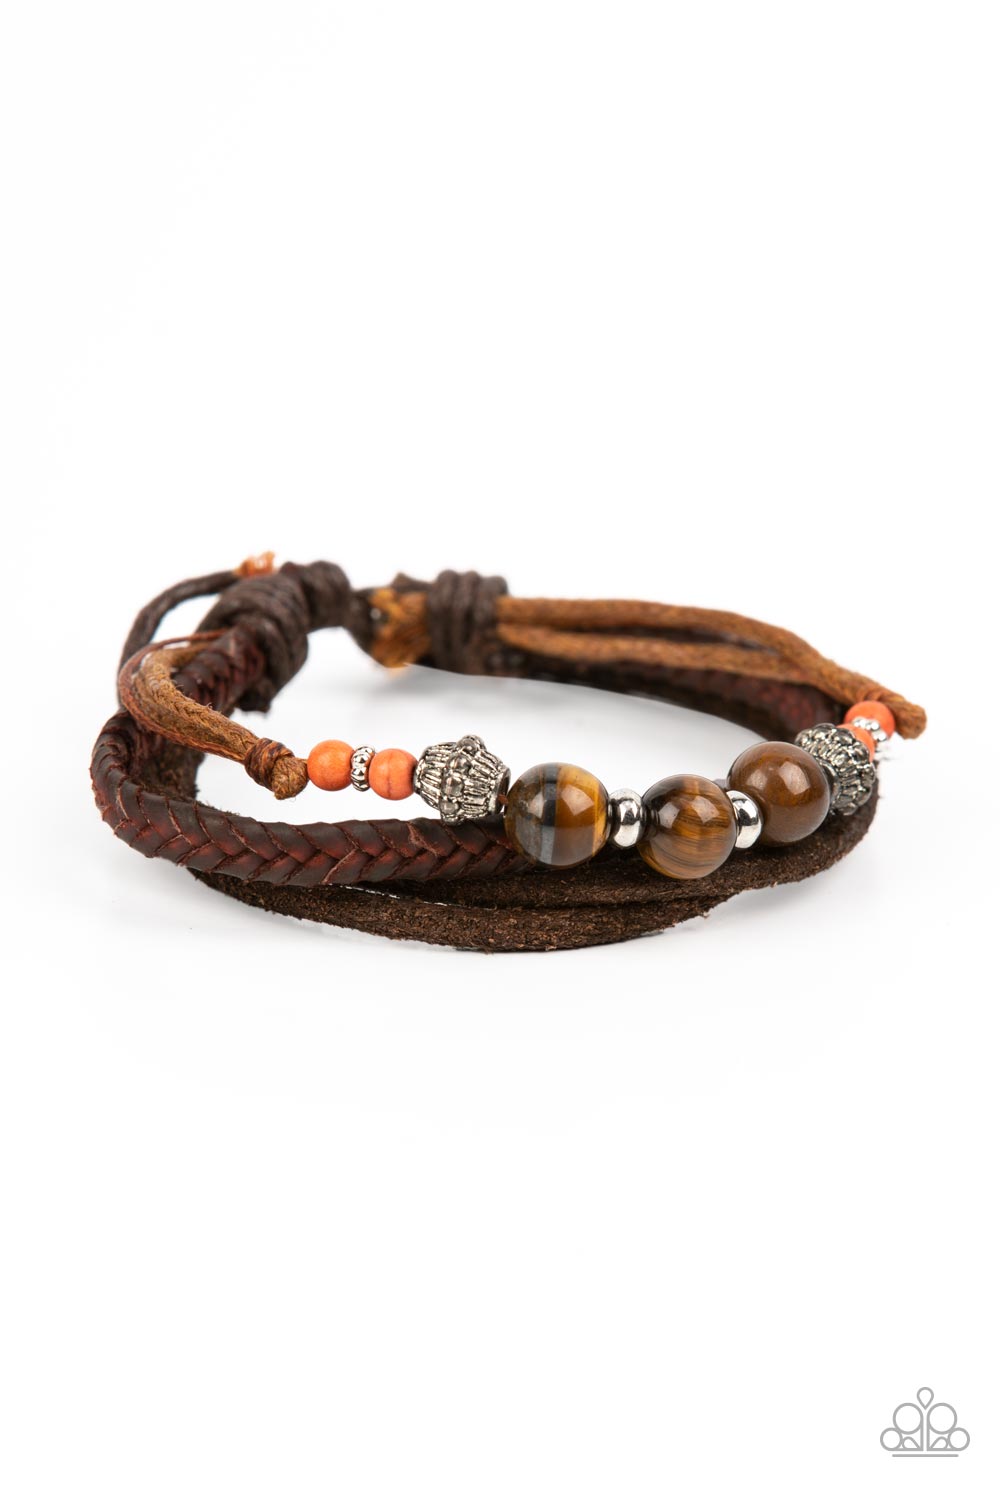 Tundra Tracker Orange, Tiger's Eye and Brown Leather Urban Bracelet - Paparazzi Accessories- lightbox - CarasShop.com - $5 Jewelry by Cara Jewels